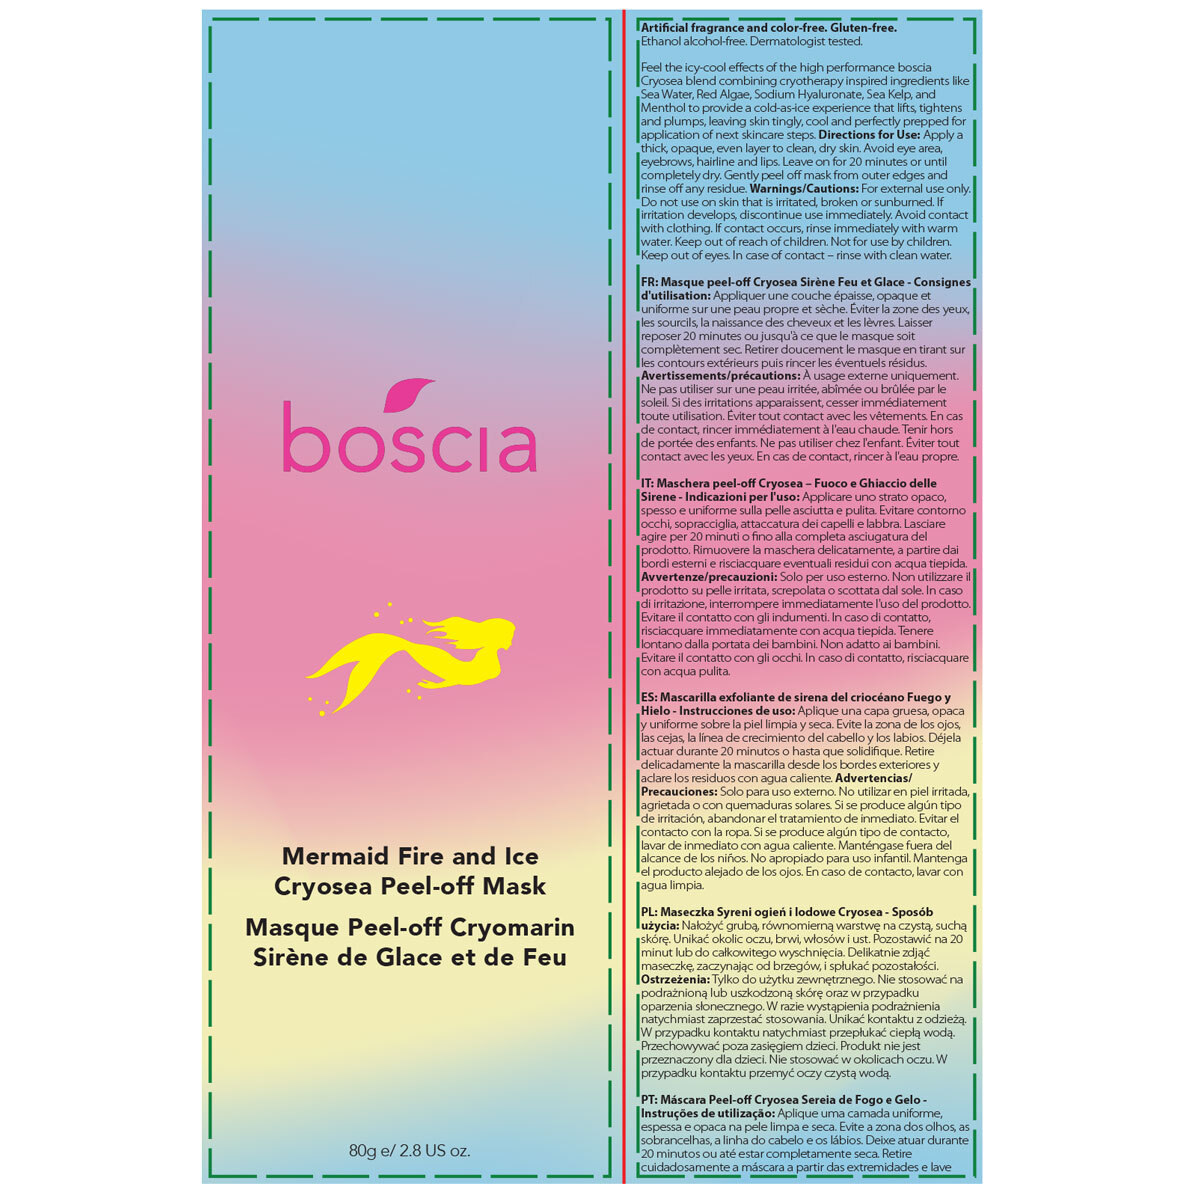 Boscia Mermaid Fire and Ice Cryosea Peel-Off Mask, 80g